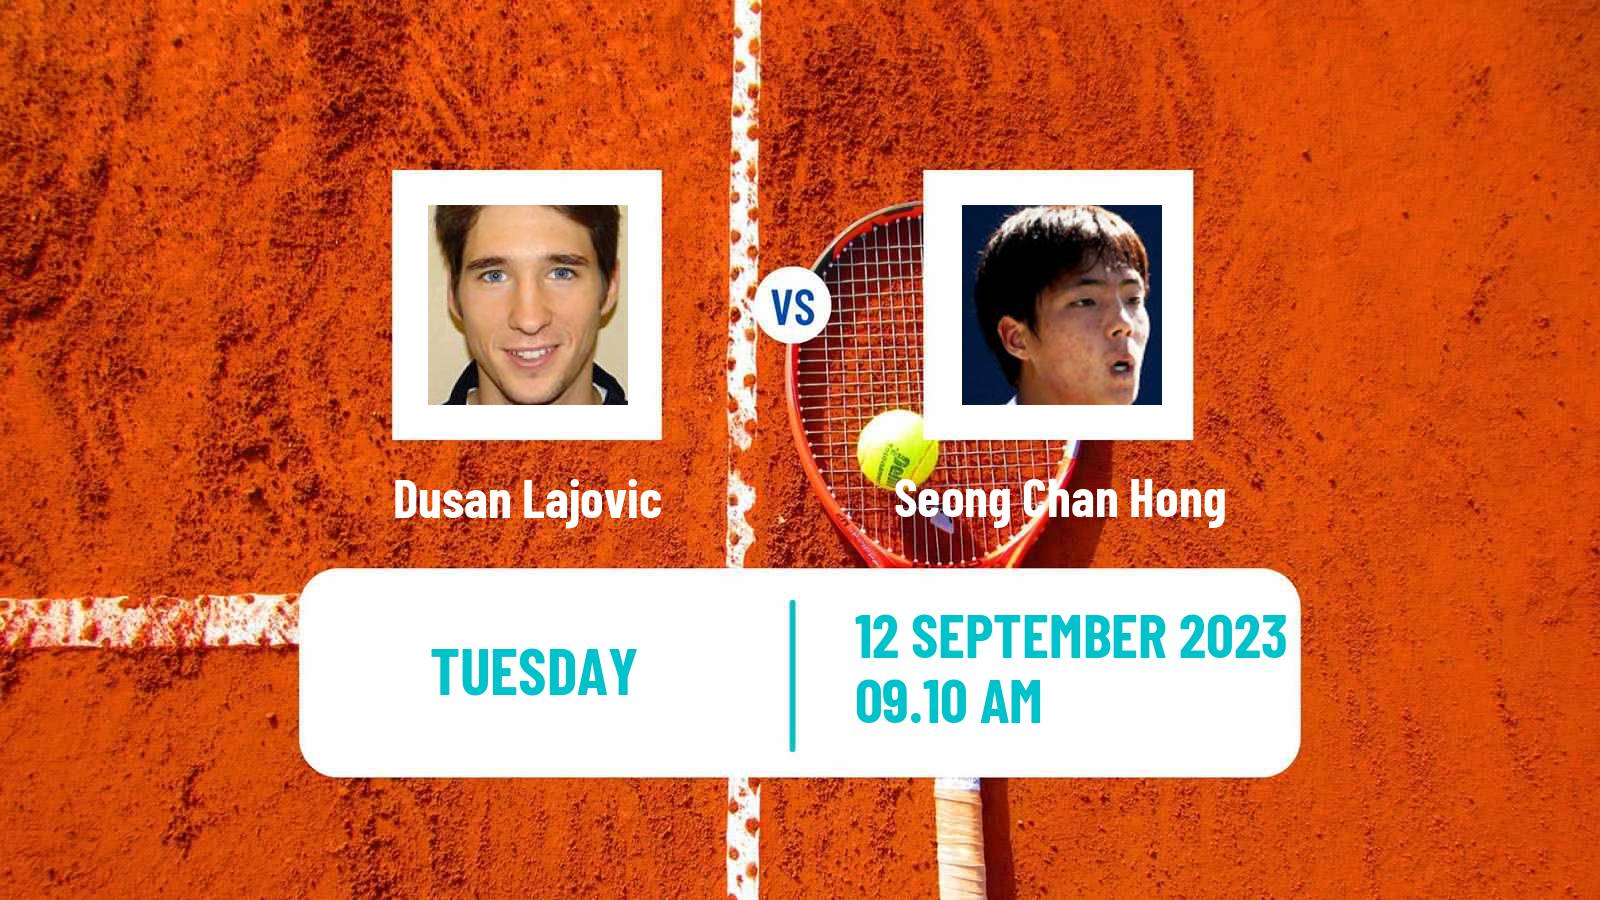 Tennis Davis Cup World Group Dusan Lajovic - Seong Chan Hong